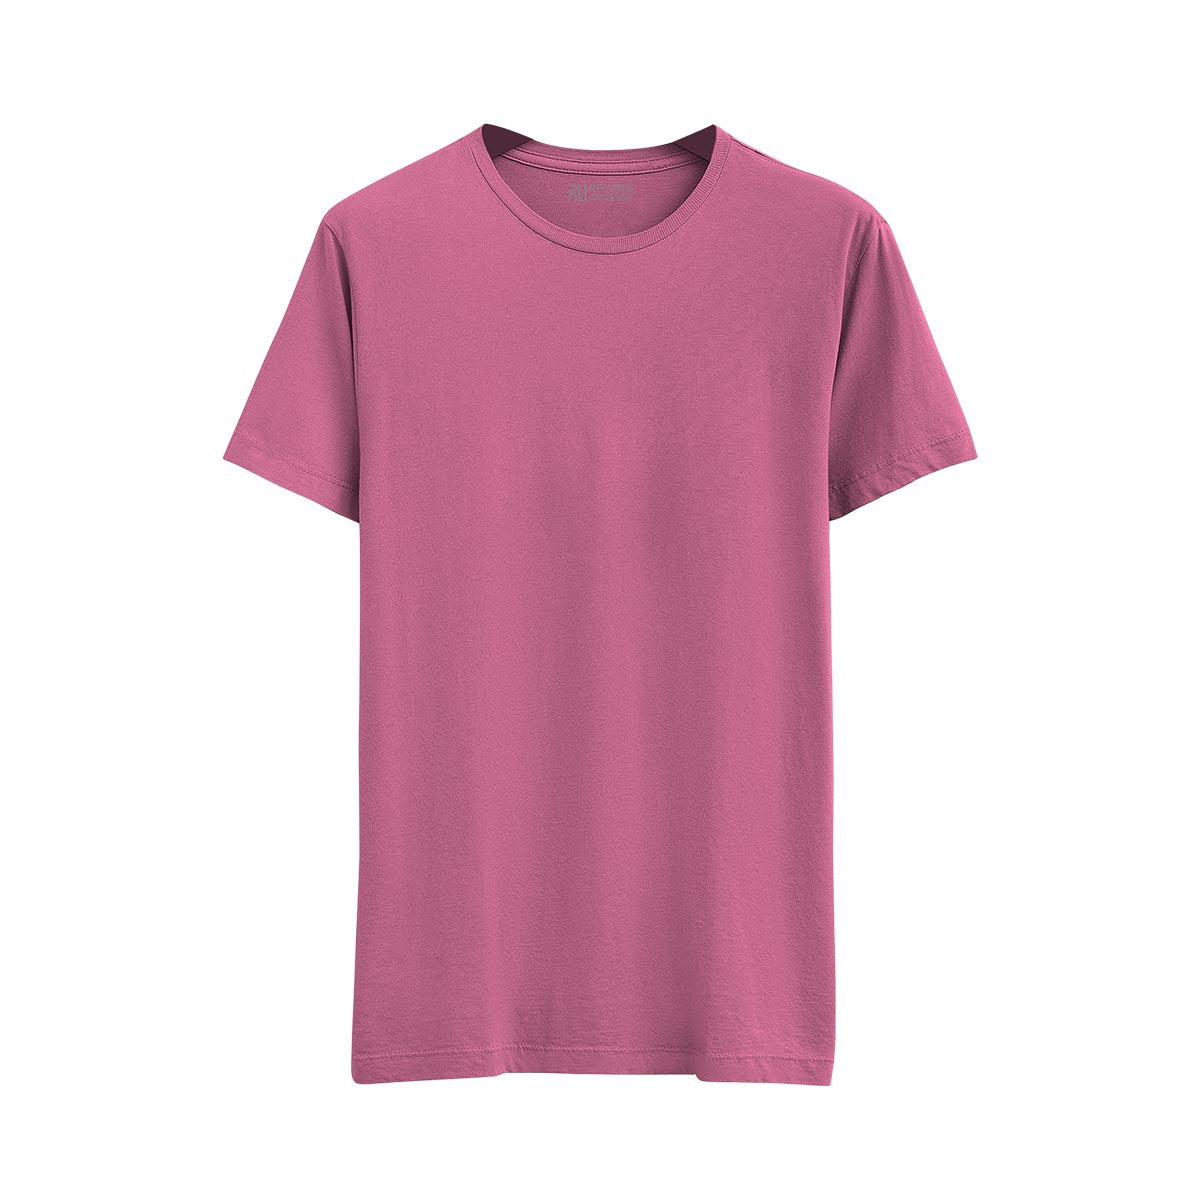 Women's Basic Pink Short Sleeve Relaxed Tee